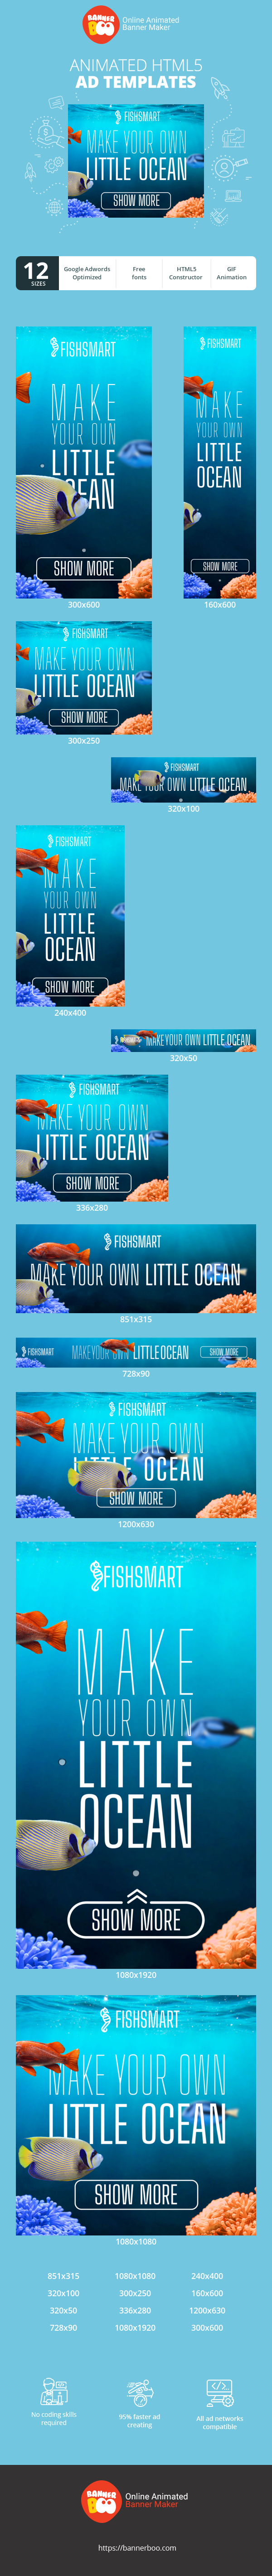 Banner ad template — Make Your Own Little Ocean — Pet Shop